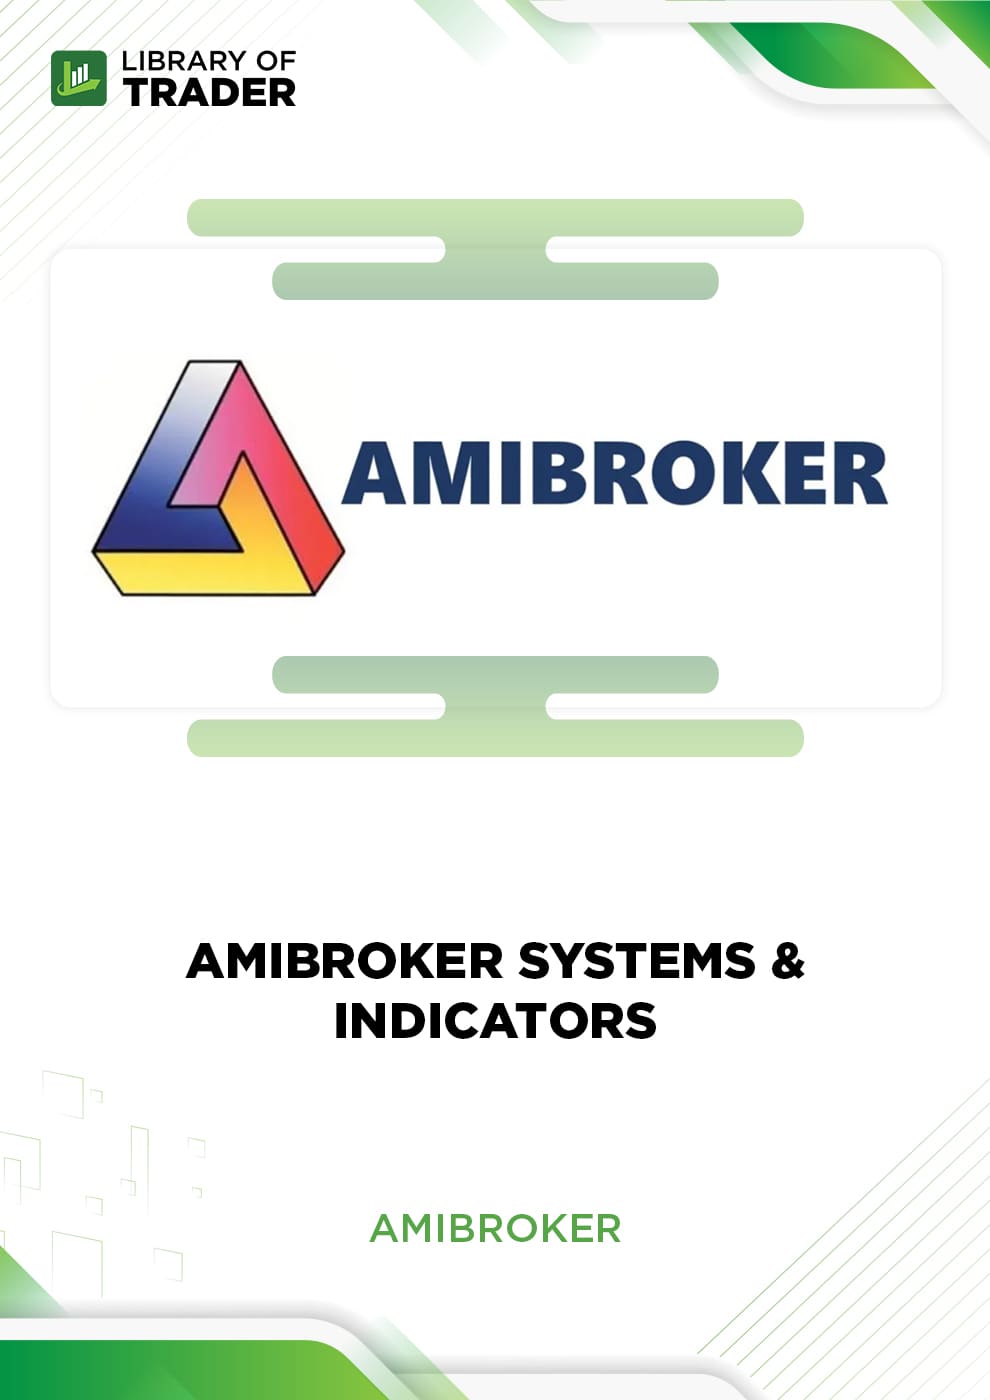 AmiBroker Systems & Indicators